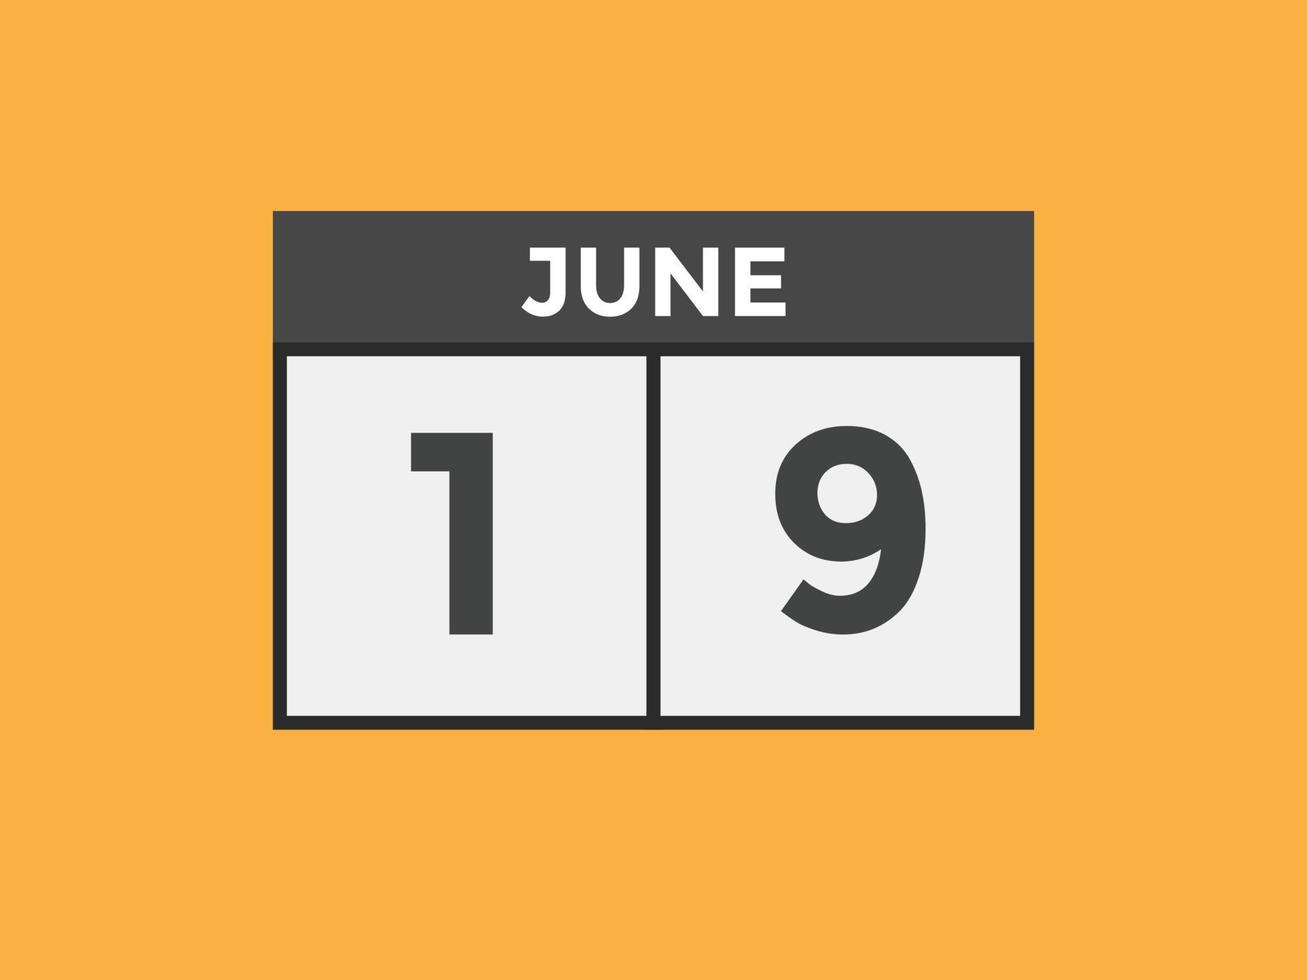 june 19 calendar reminder. 19th june daily calendar icon template. Calendar 19th june icon Design template. Vector illustration